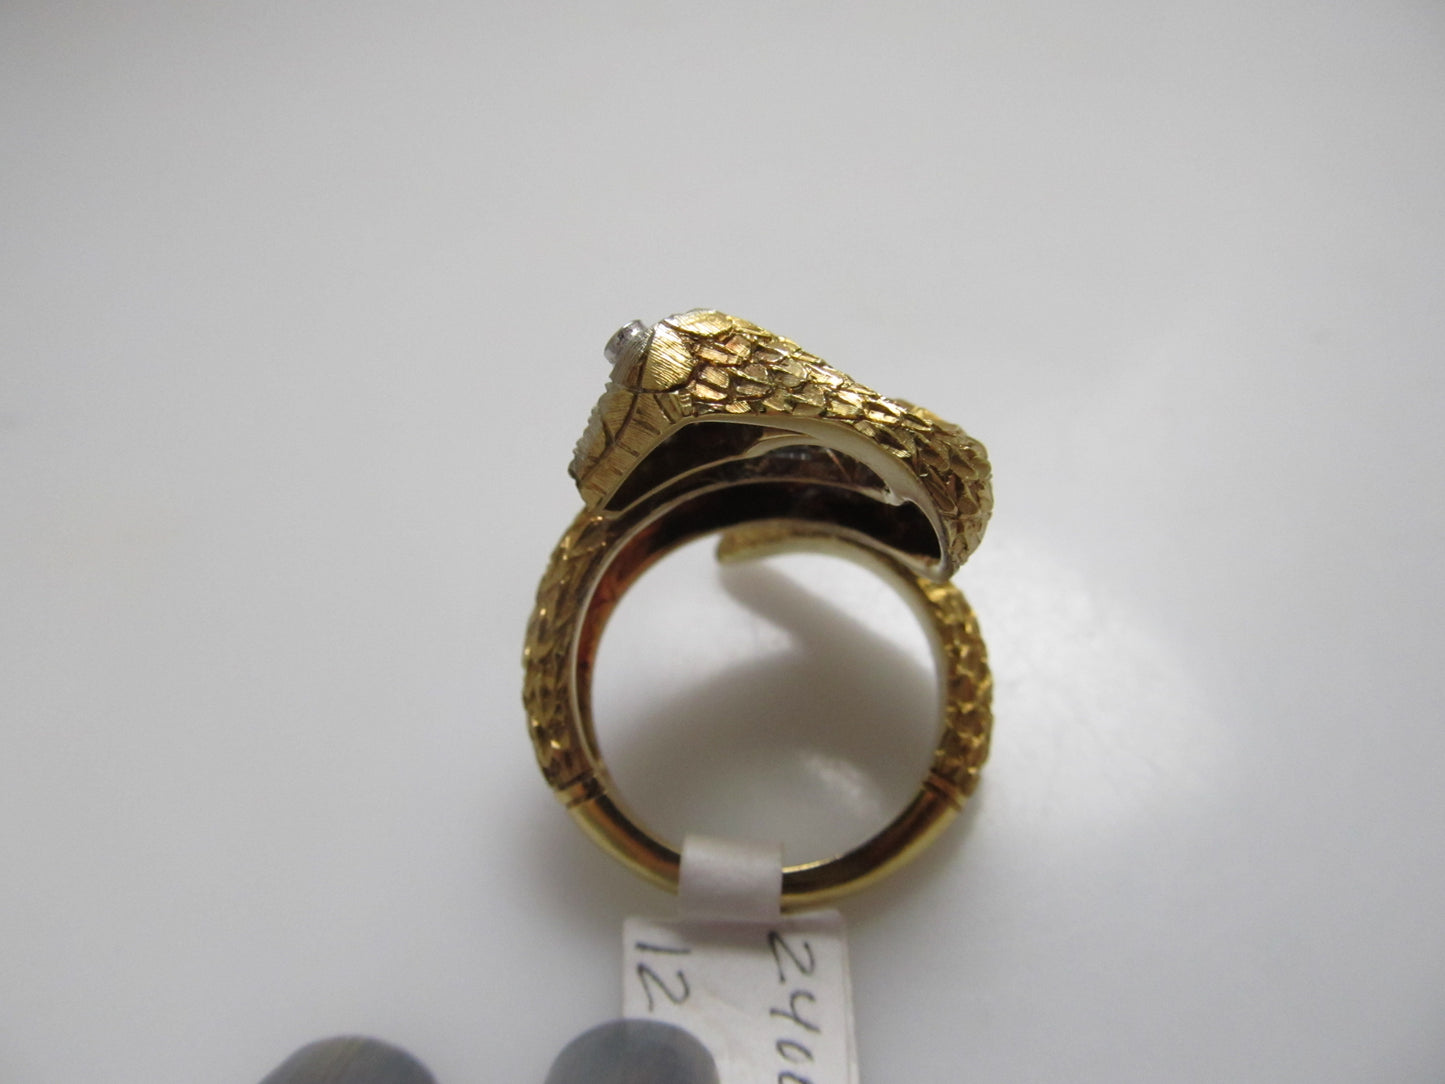 Vintage textured snake ring